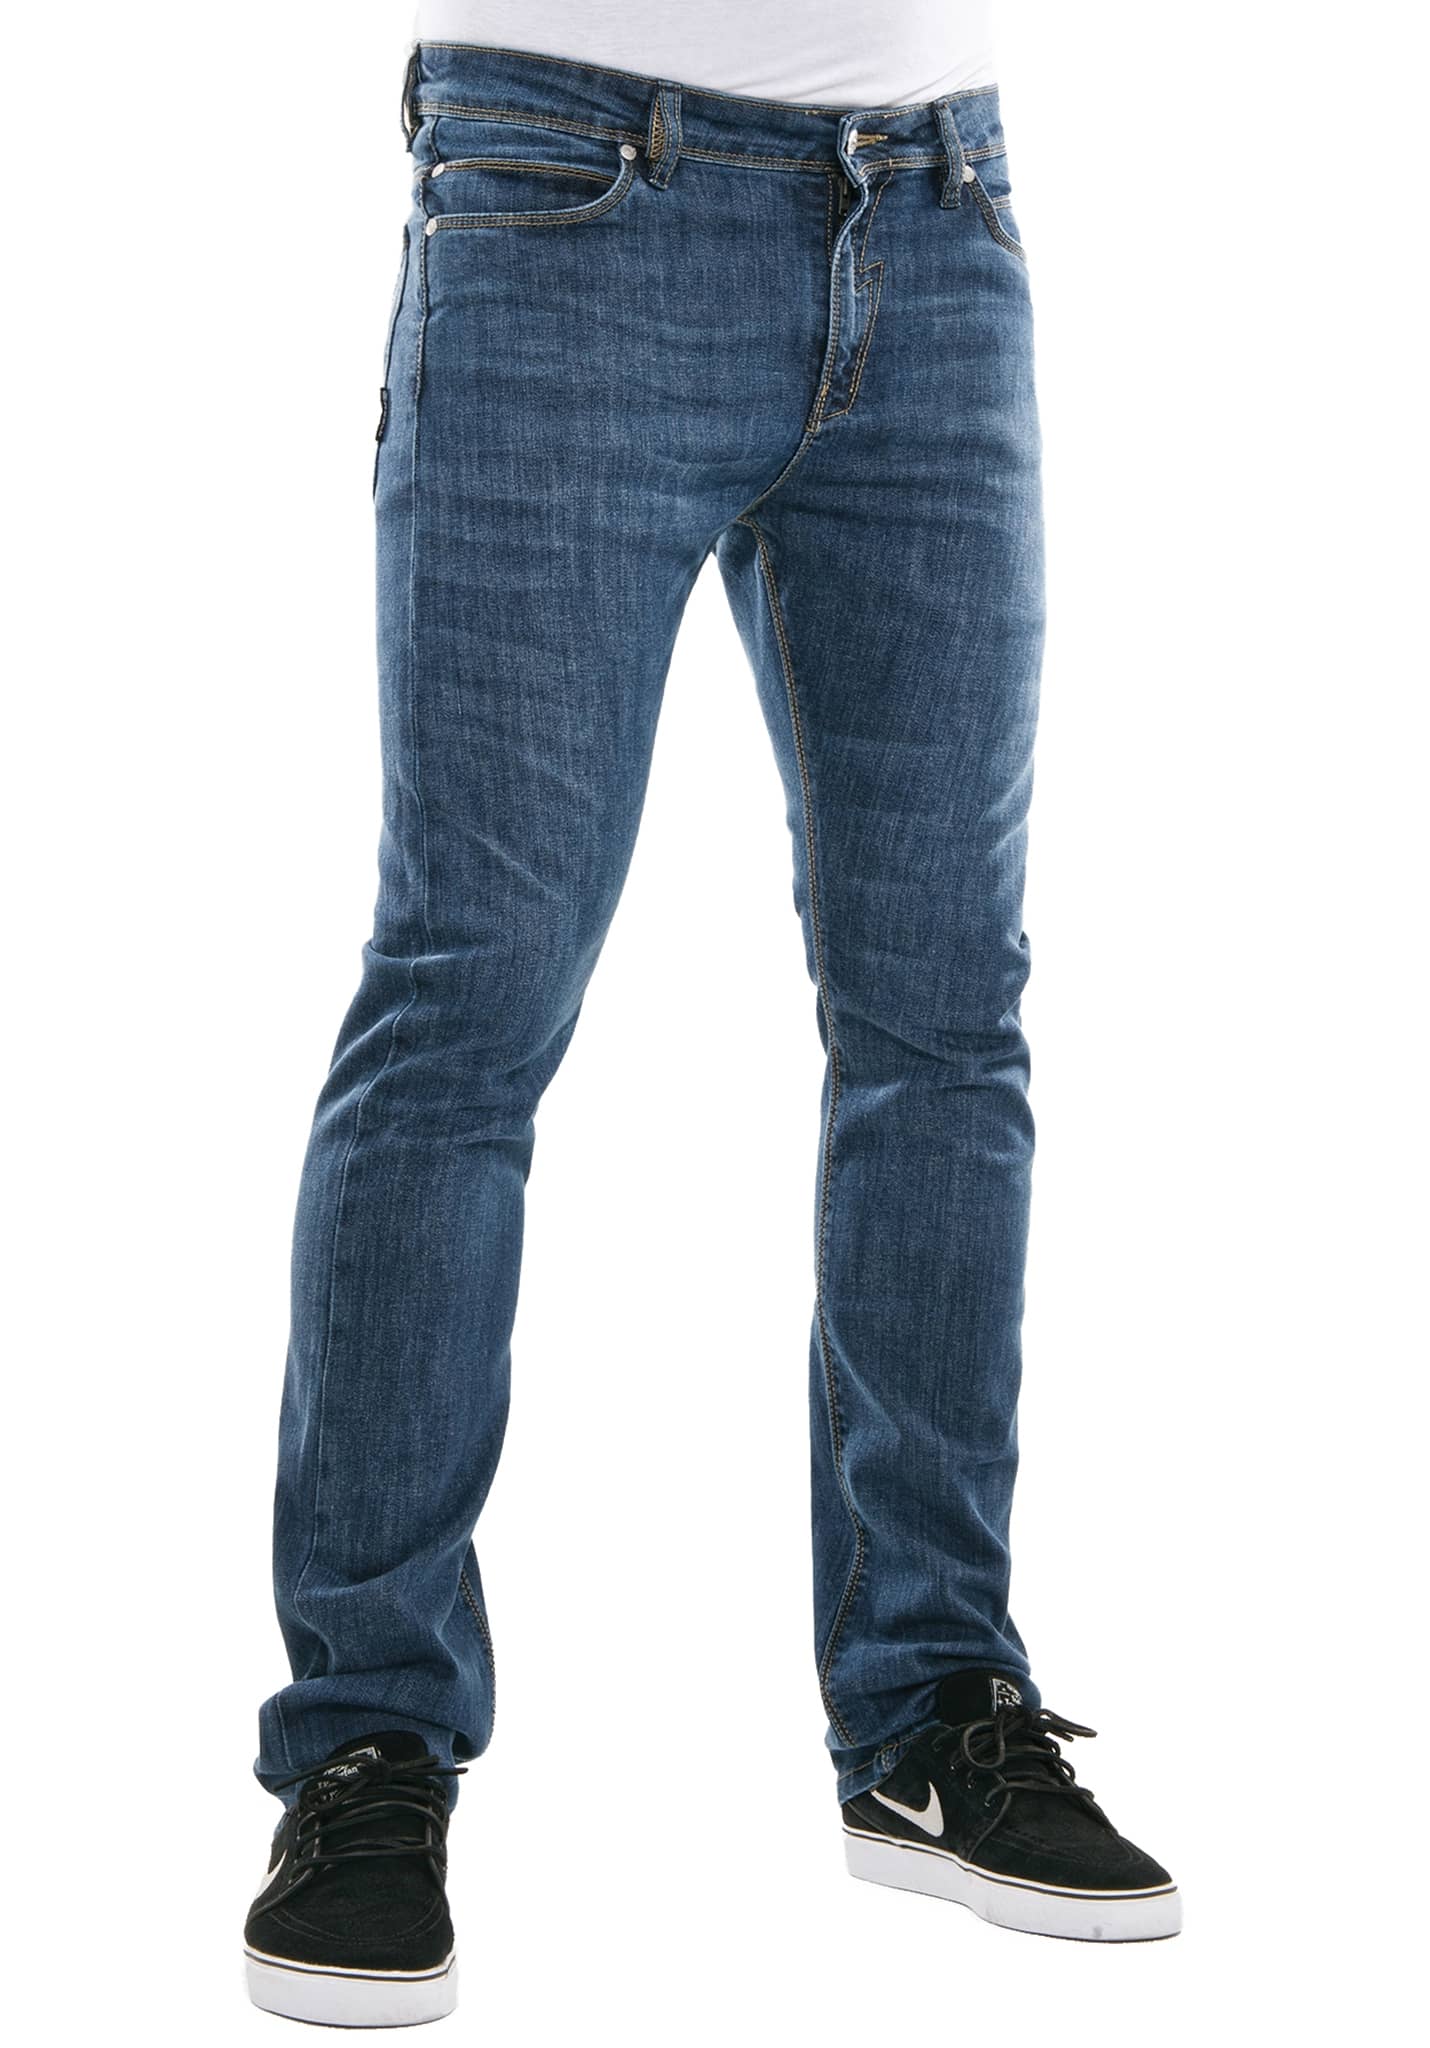 Reell Skin Jeans jeans 32/32